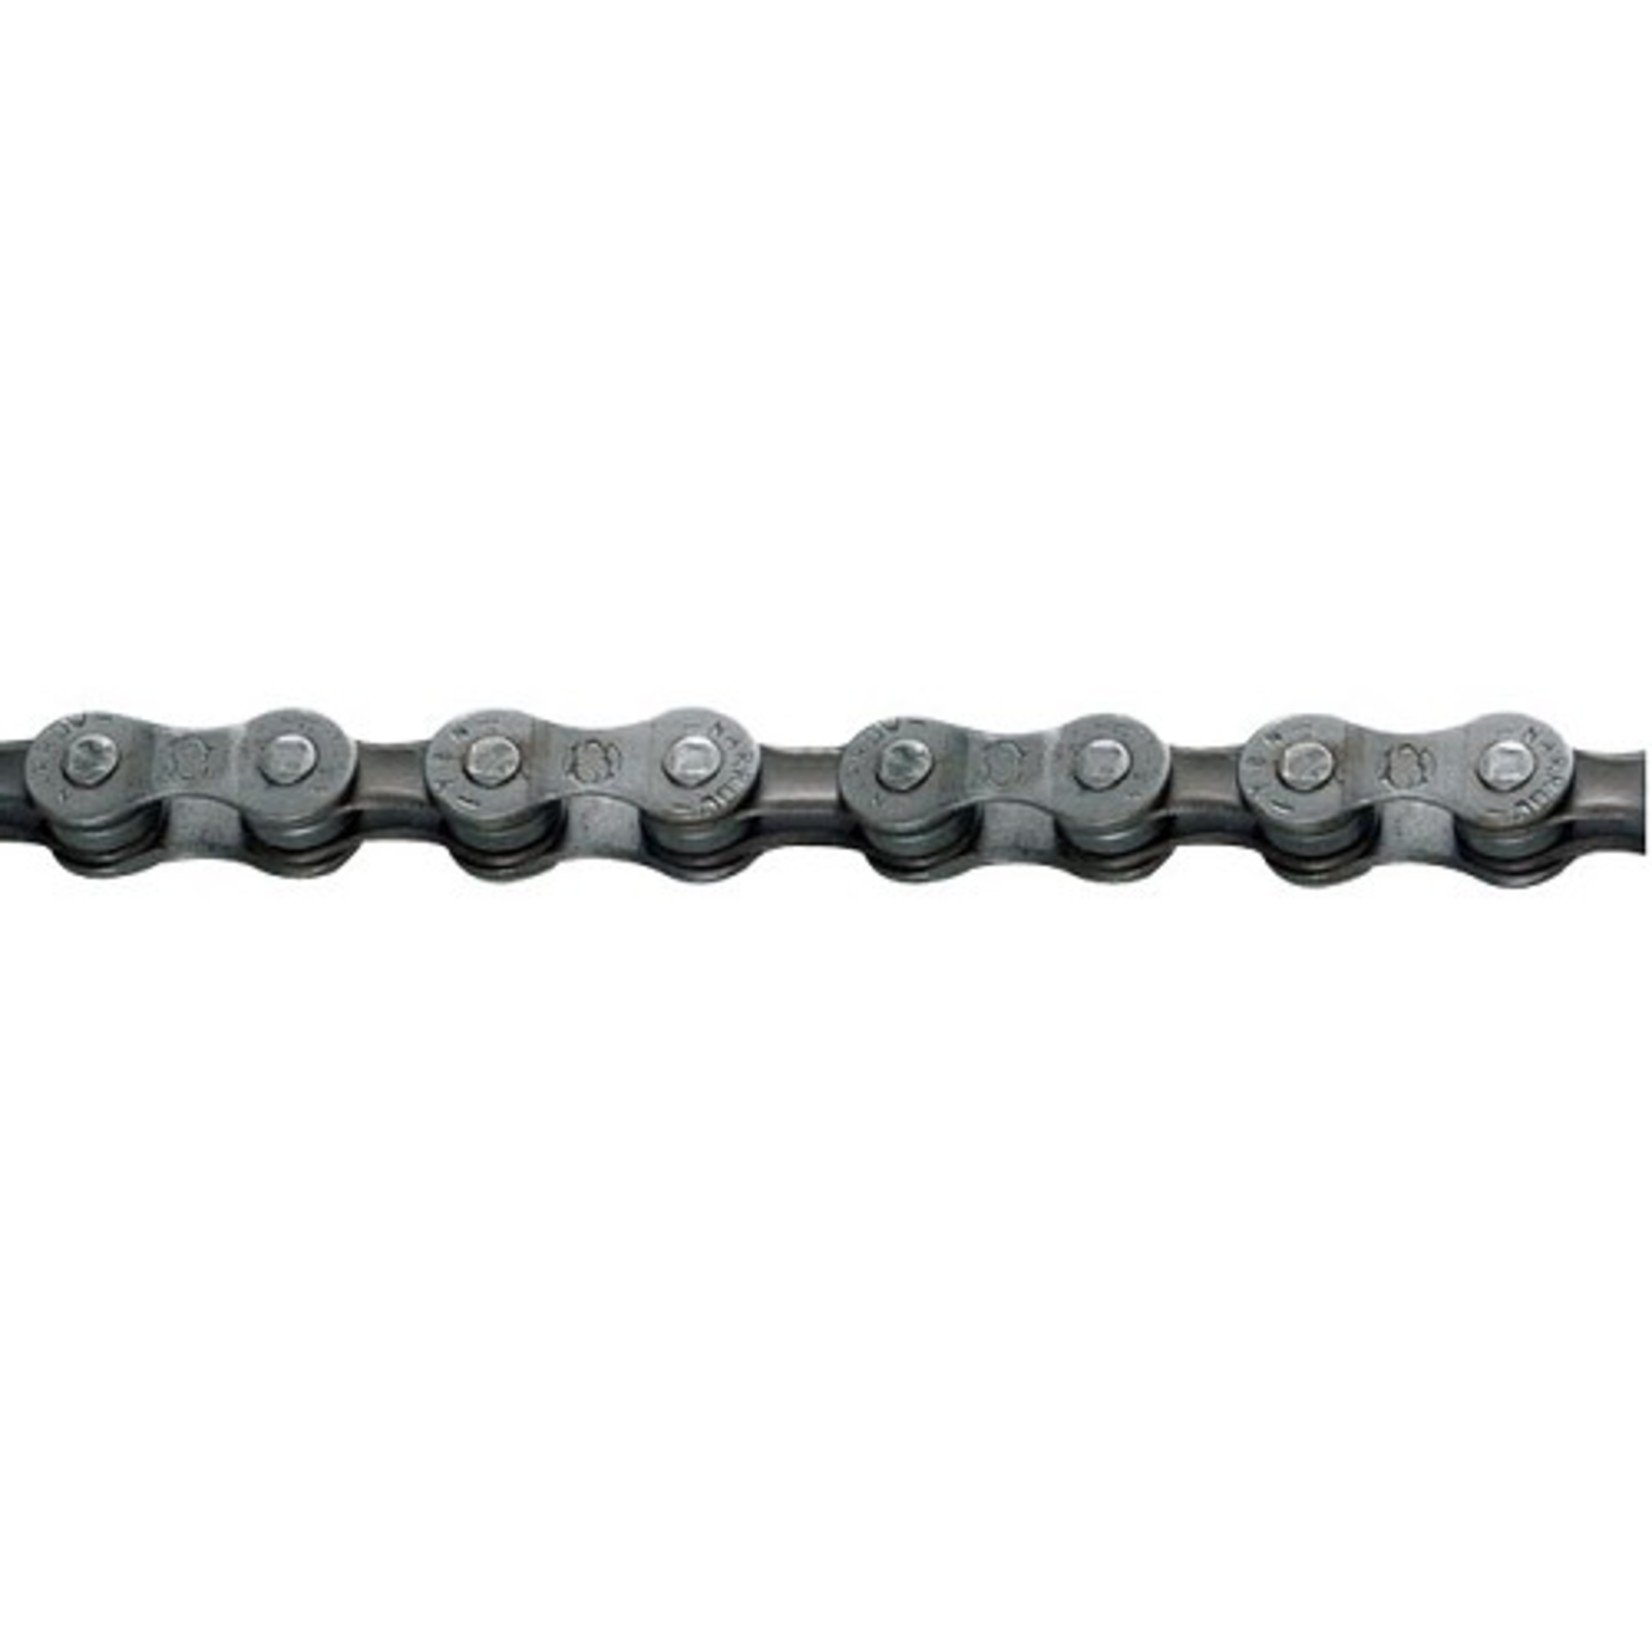 Crupi Crupi Rhythm Expert Chain Full Link  3/32" Solid Pin